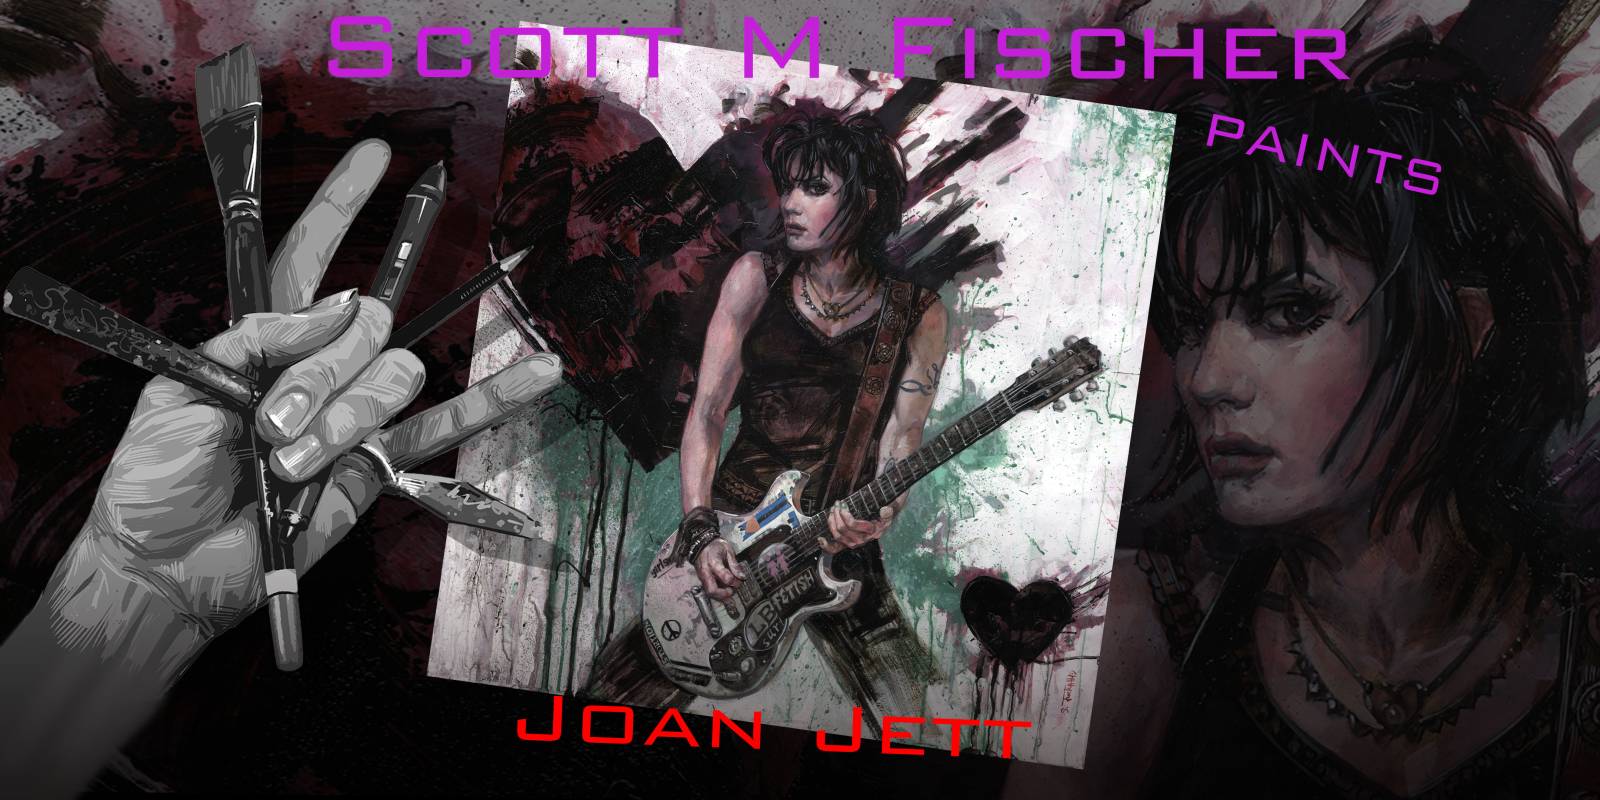 Fischer Paints- Joan Jett